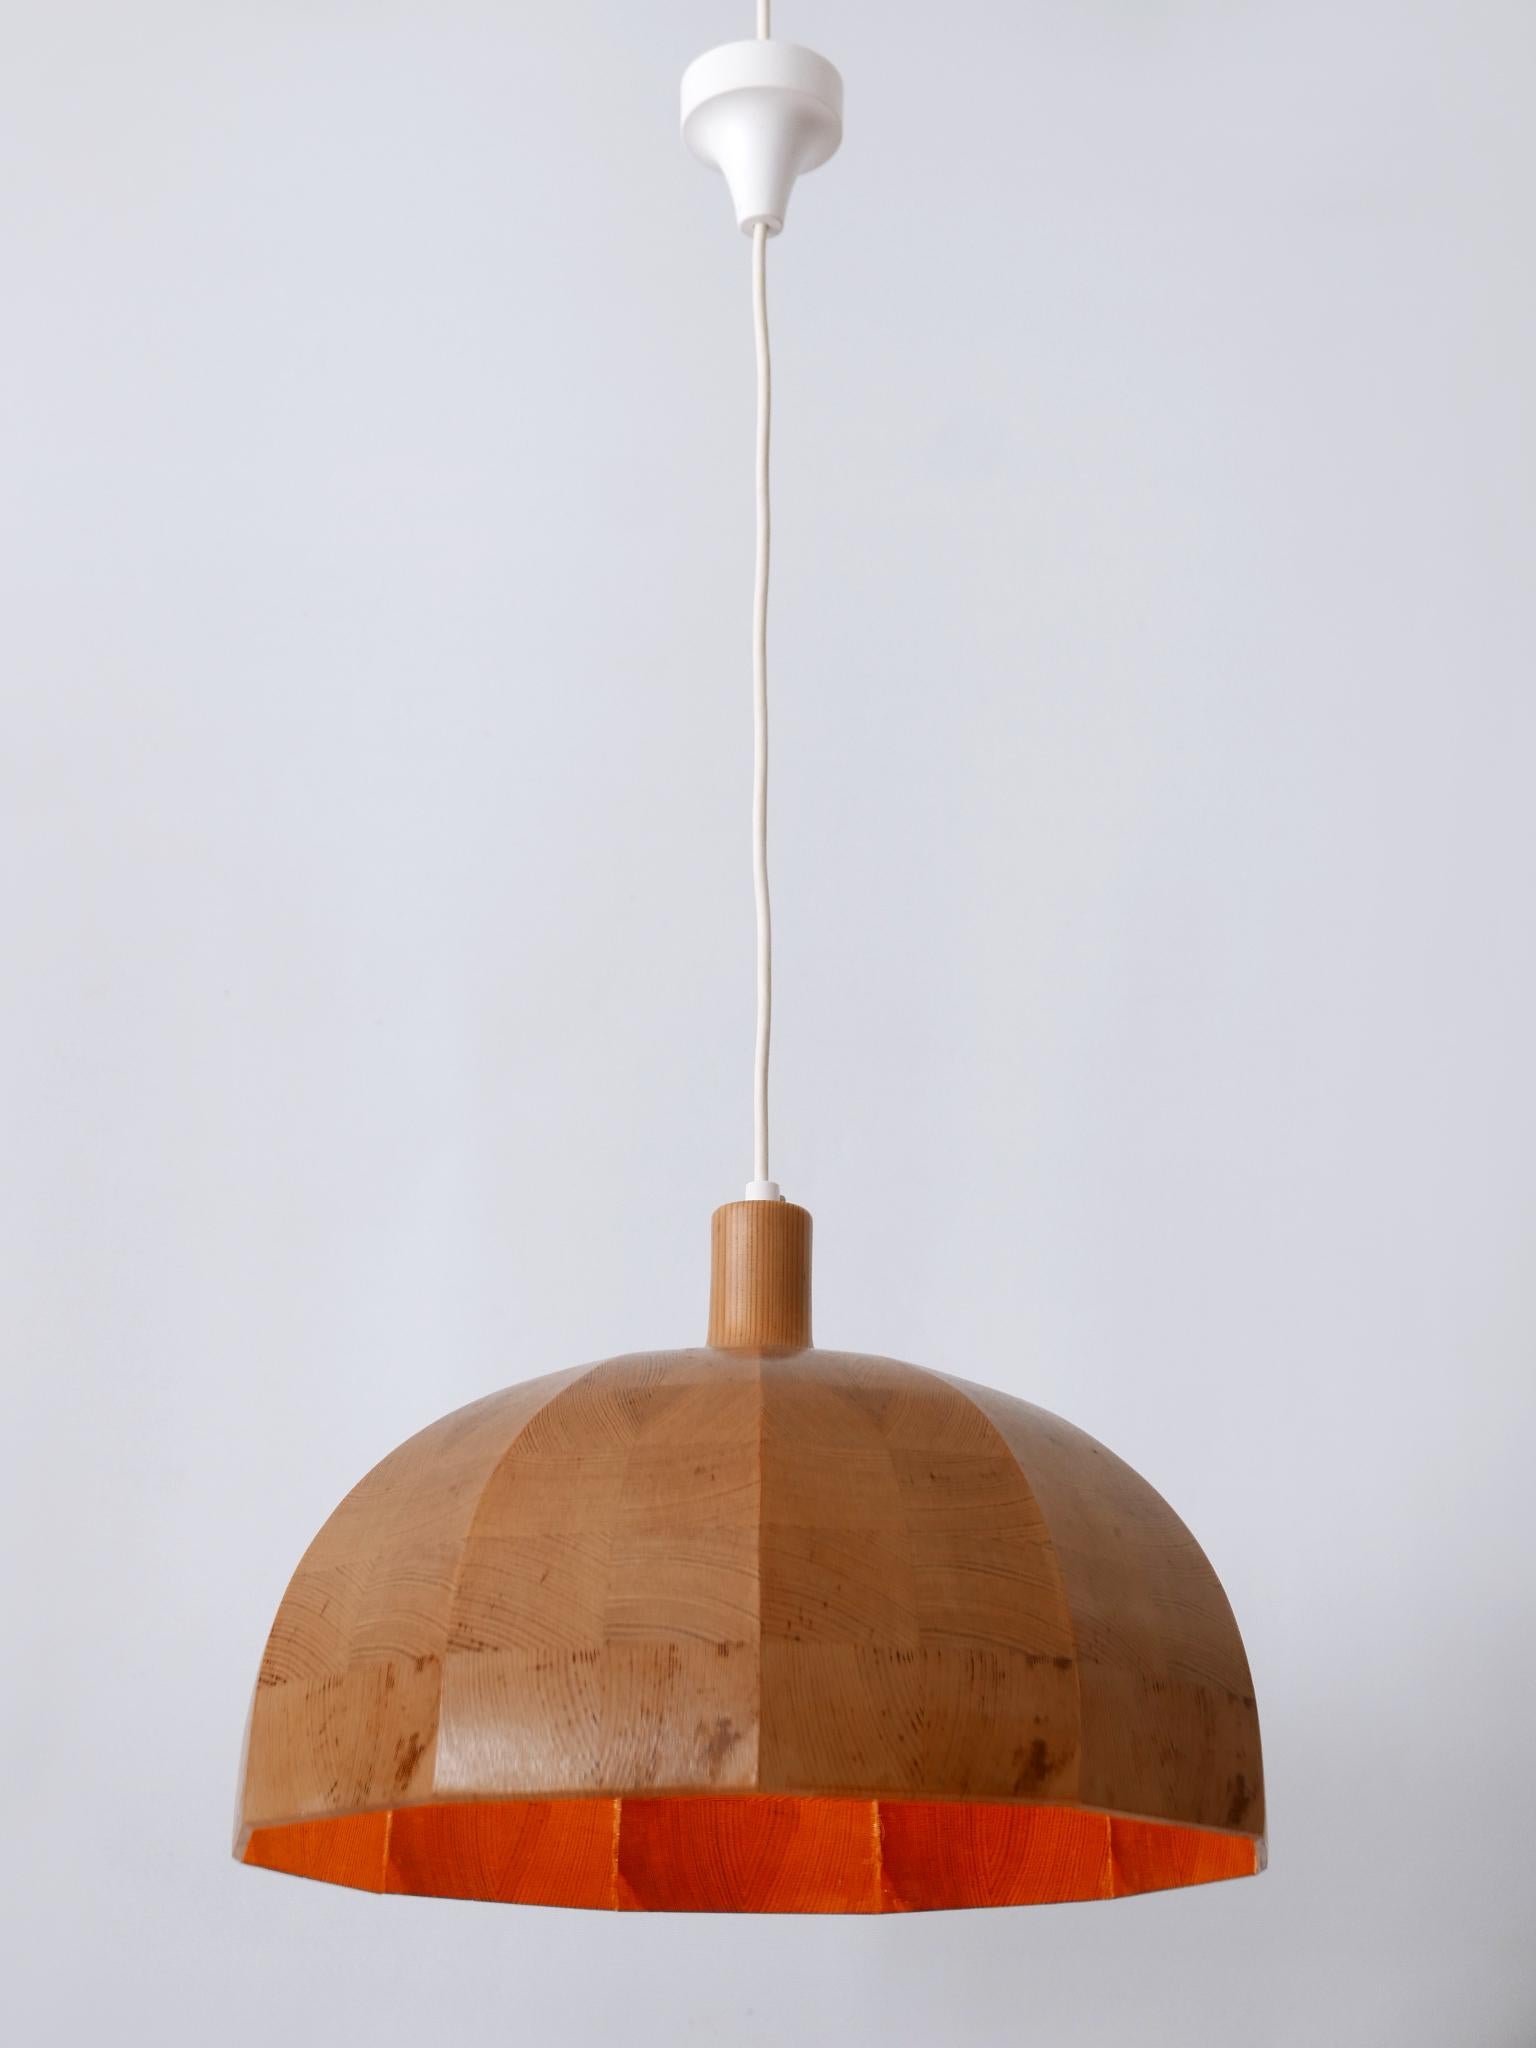 Rare Mid-Century Modern Pine Wood Pendant Lamp or Hanging Light Sweden, 1960s For Sale 9